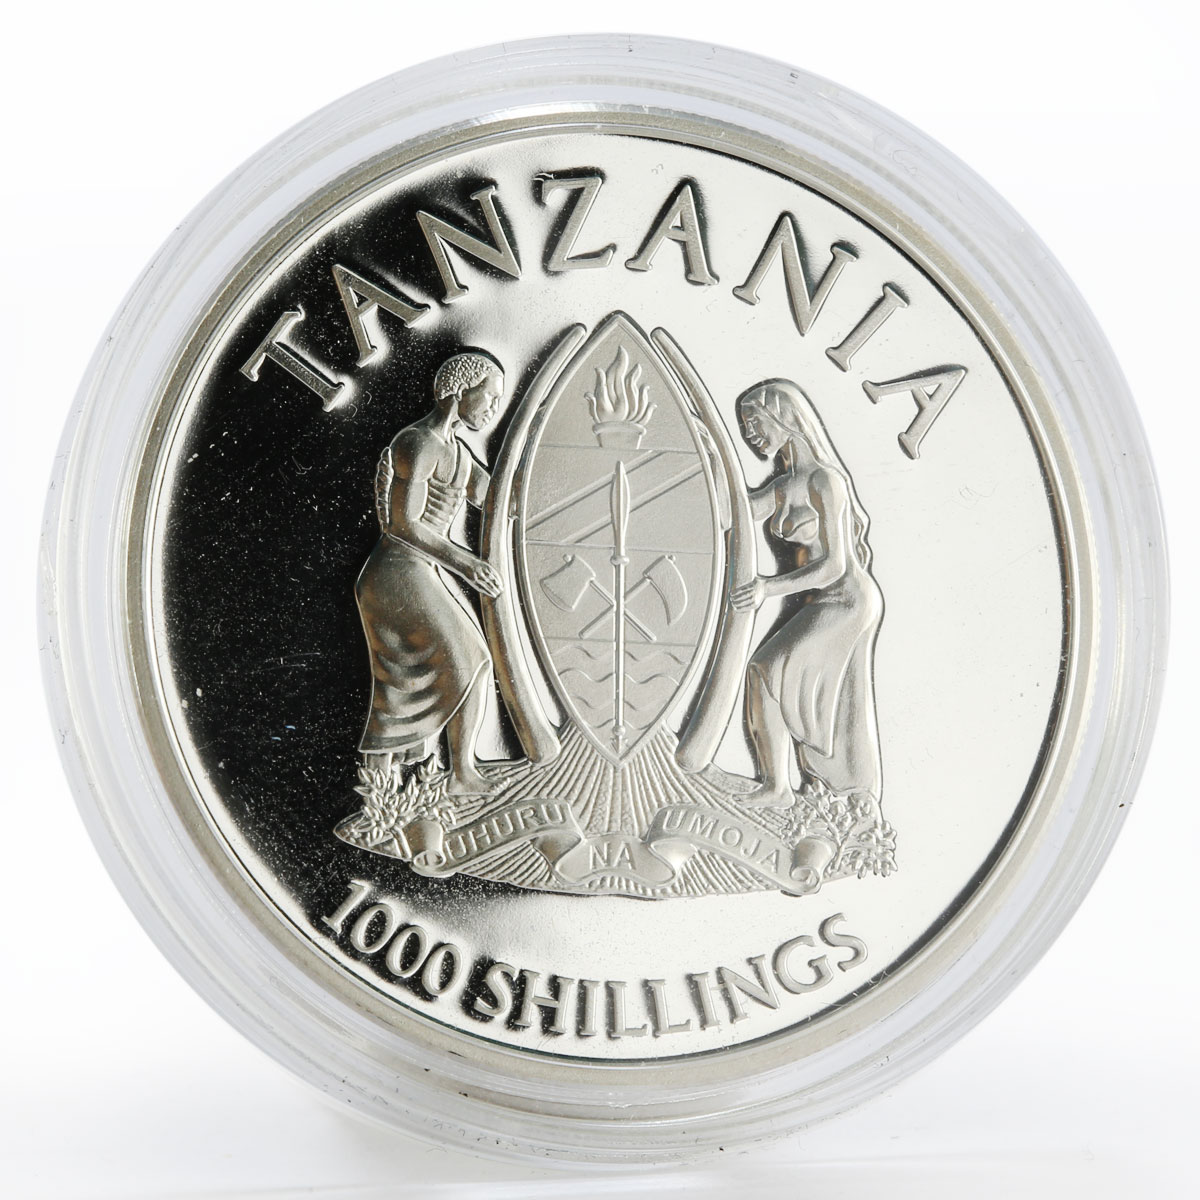 Tanzania 1000 shillings Vulture gyps fulvus birds colored proof coin 2014